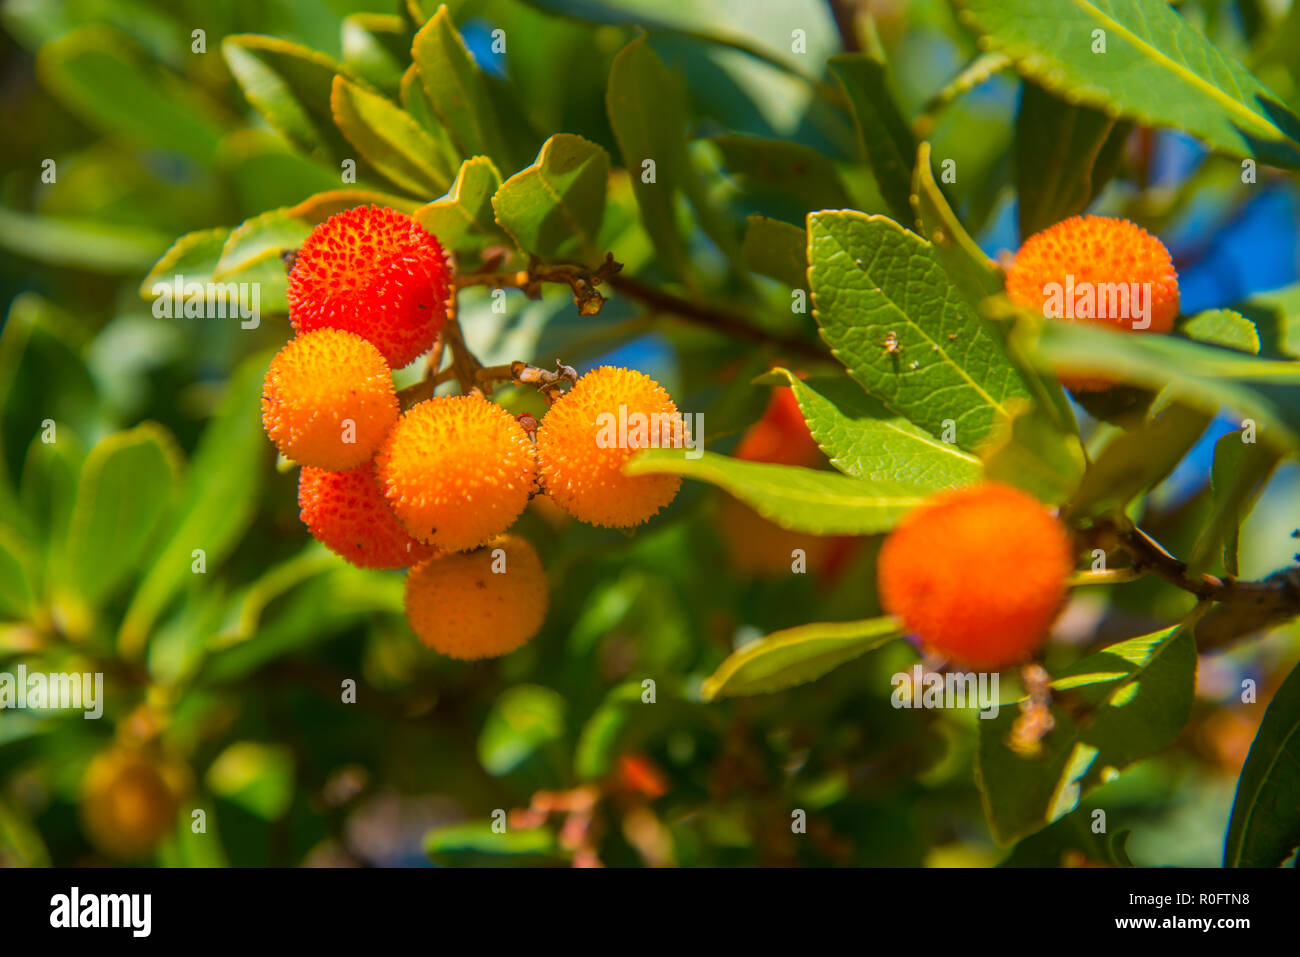 Arbutus fruits. Stock Photo